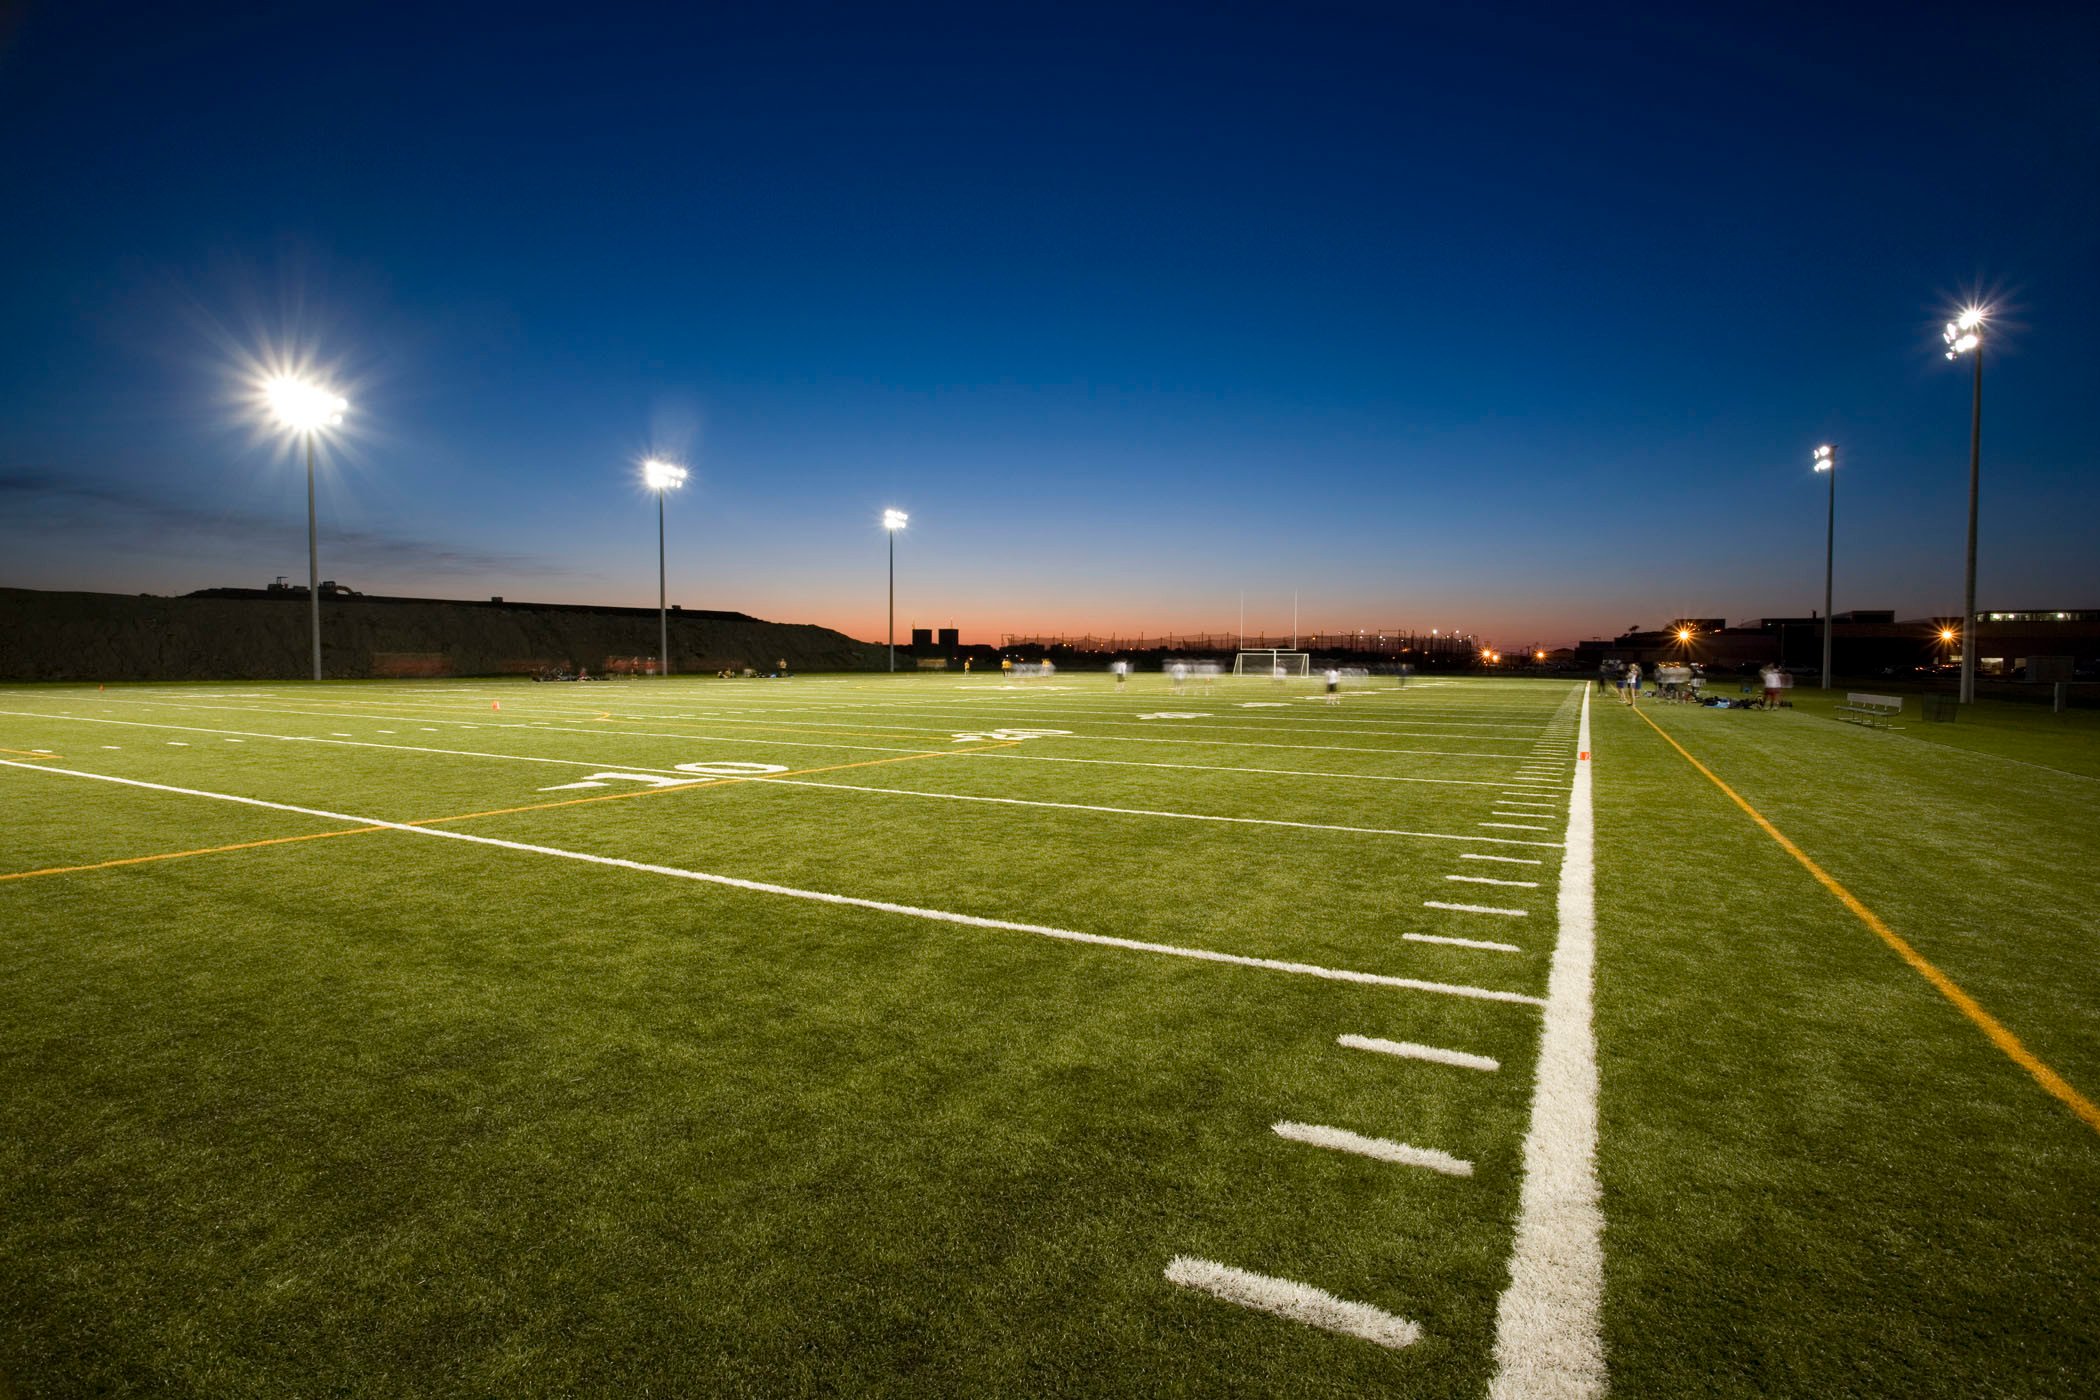 Download High School Football Wallpaper Gallery Data Src Field At Night